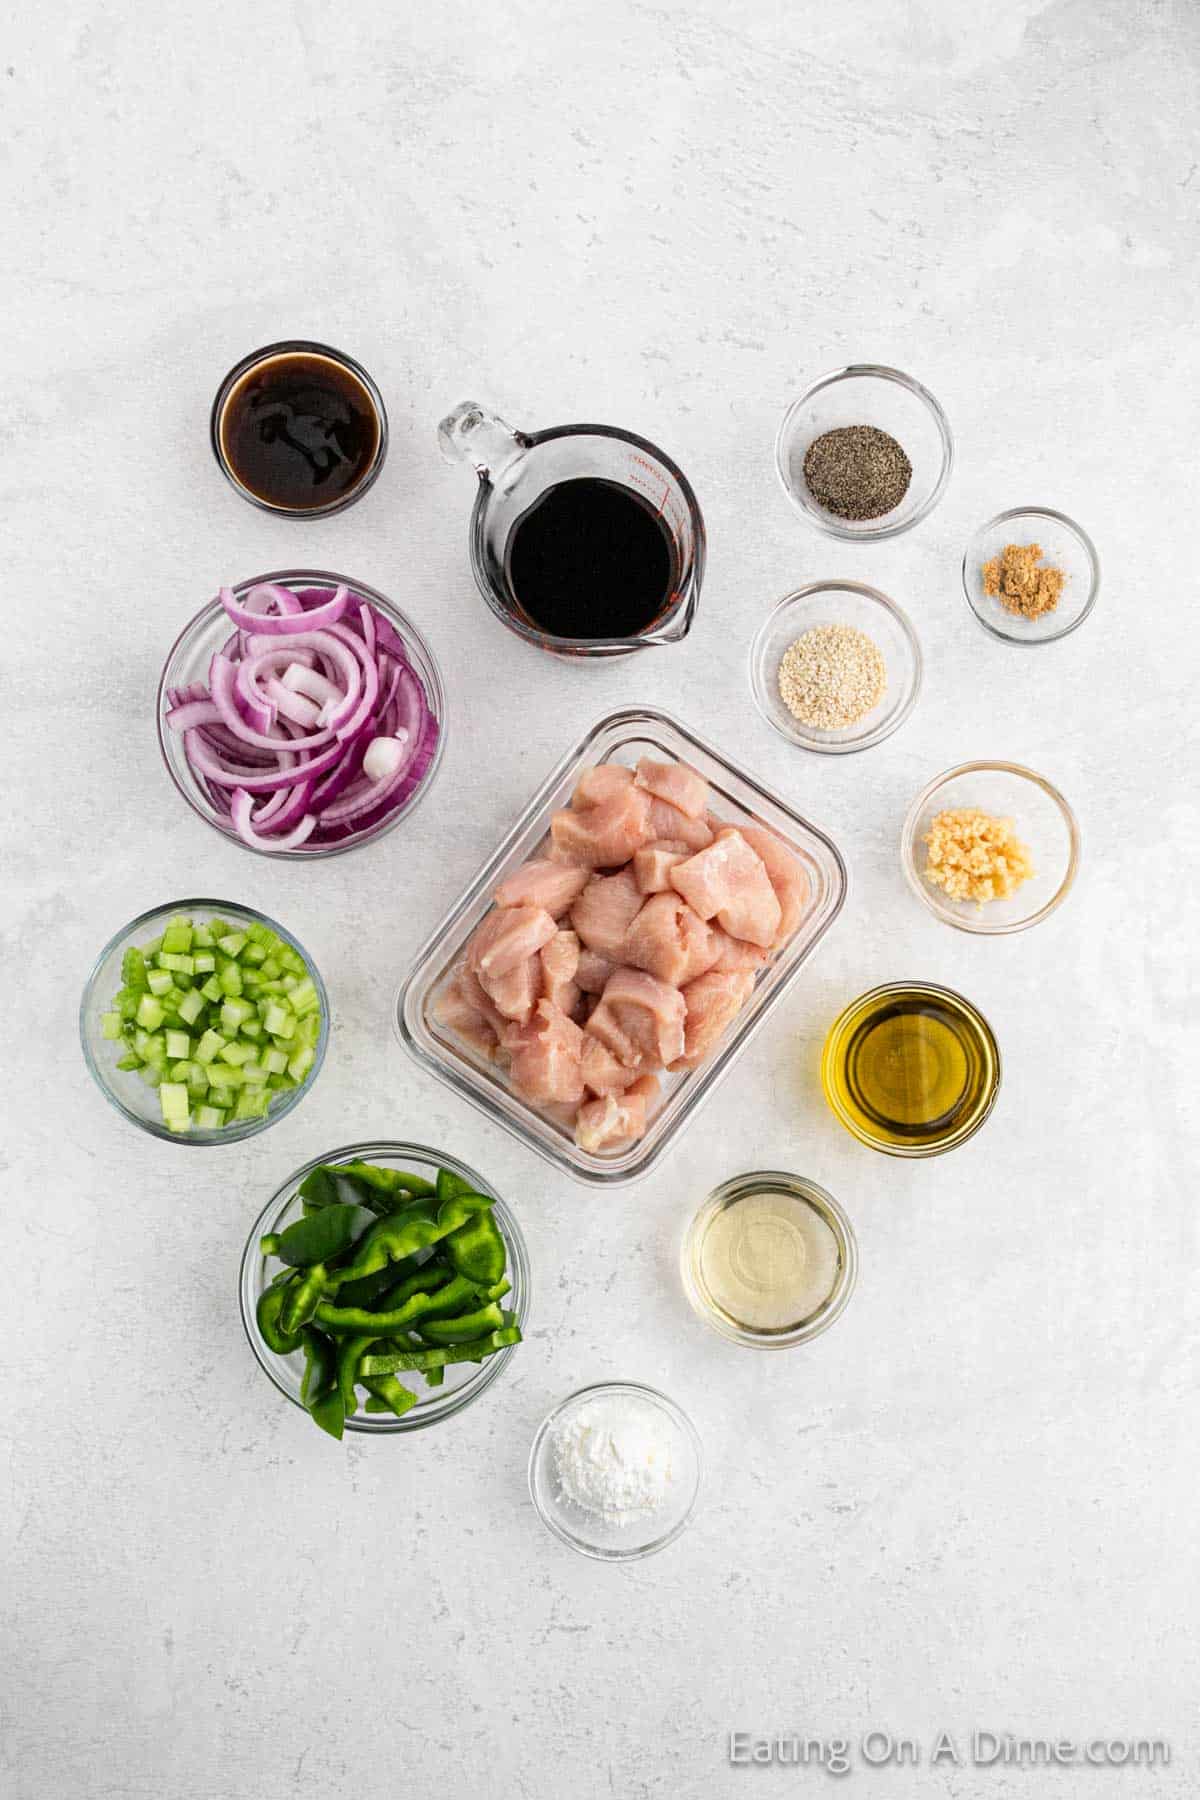 Ingredients - olive oil, chicken, green pepper, red onion, celery, garlic, sesame seeds, soy sauce, cornstarch, oyster sauce, rice wine vinegar, pepper, ginger